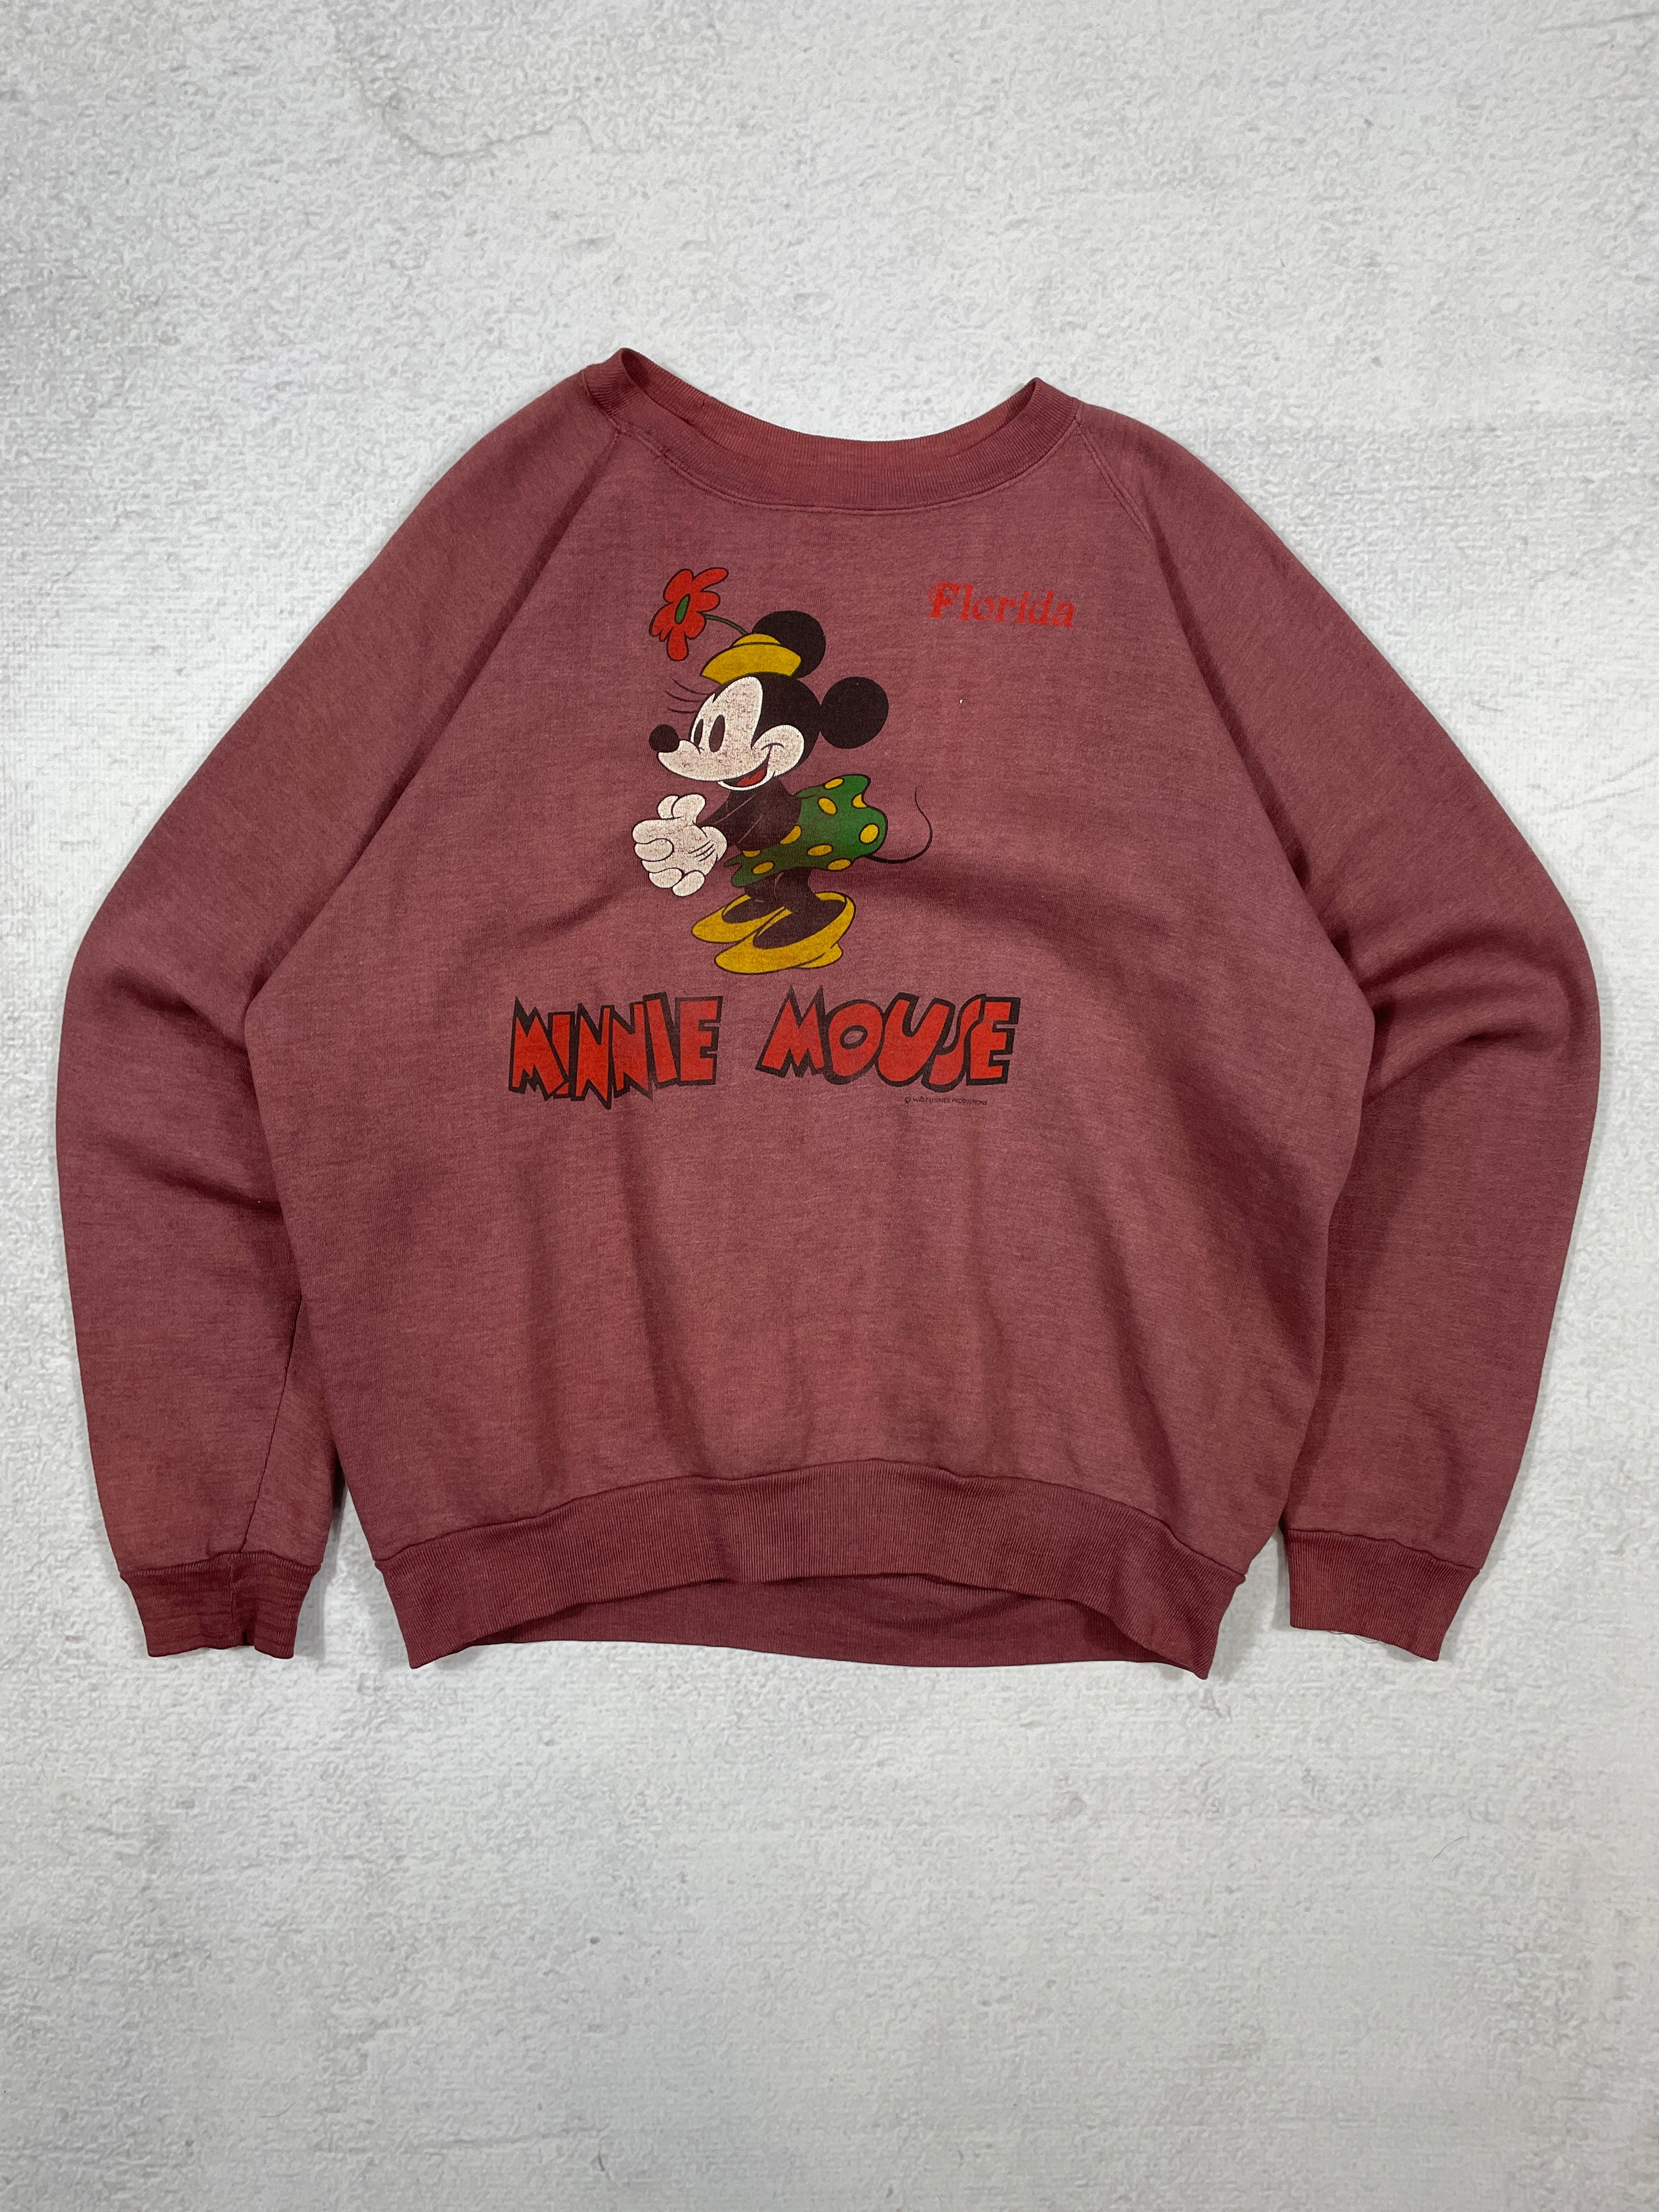 Vintage Dyed Disney Minnie Mouse Crewneck Sweatshirt - Women's XL